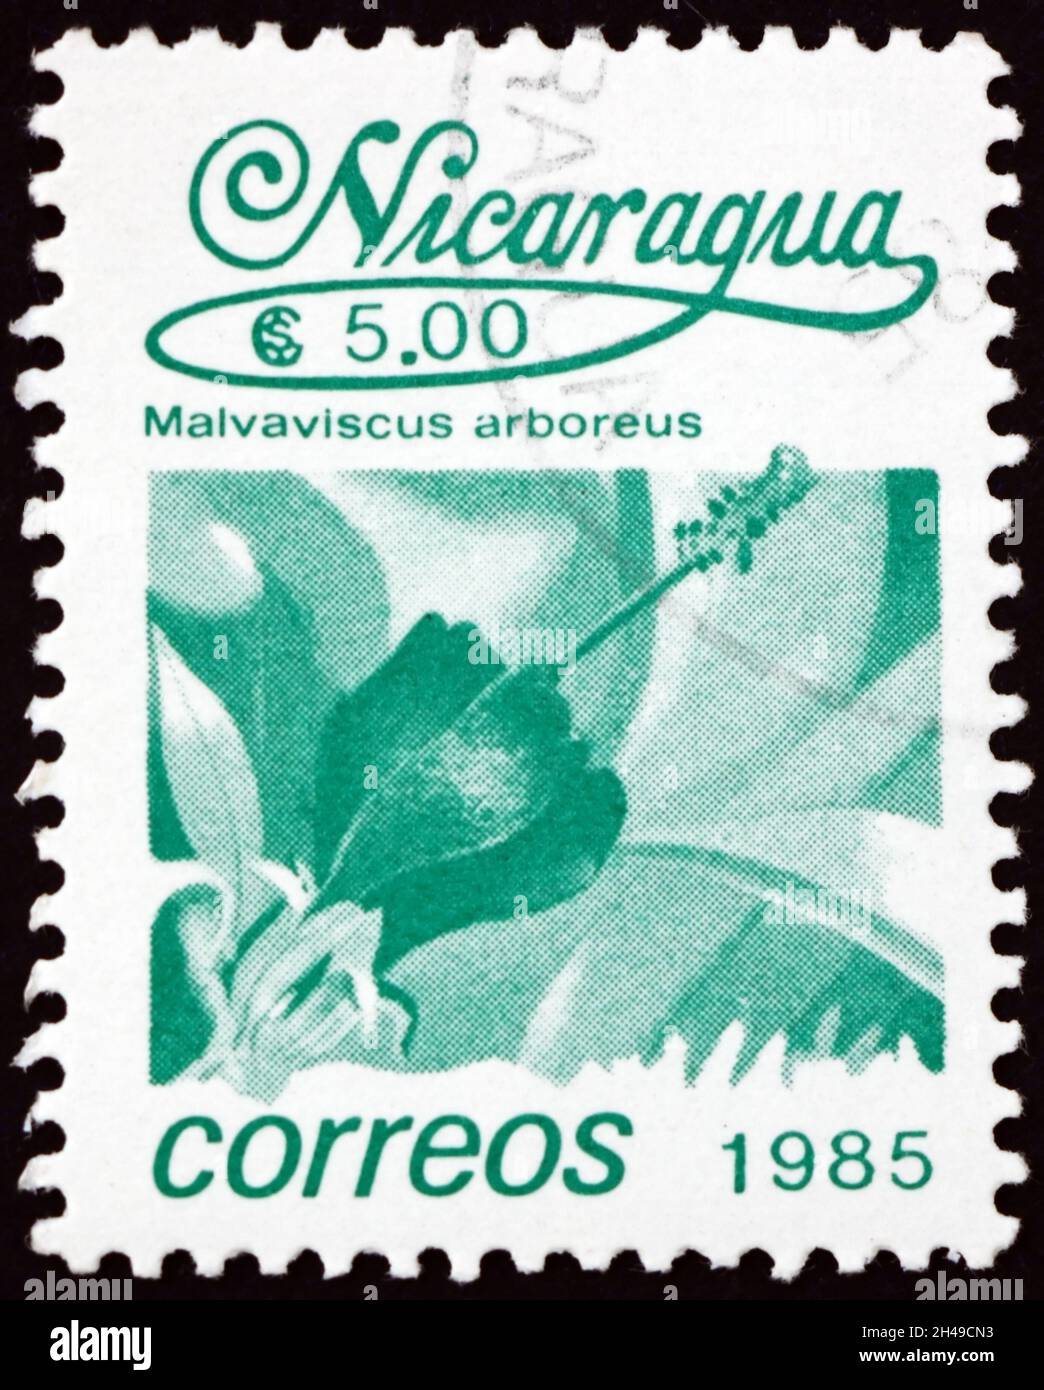 NICARAGUA - CIRCA 1986: a stamp printed in Nicaragua shows Turkcap (malvaviscus arboreus), is a species of flowering plant, circa 1986 Stock Photo